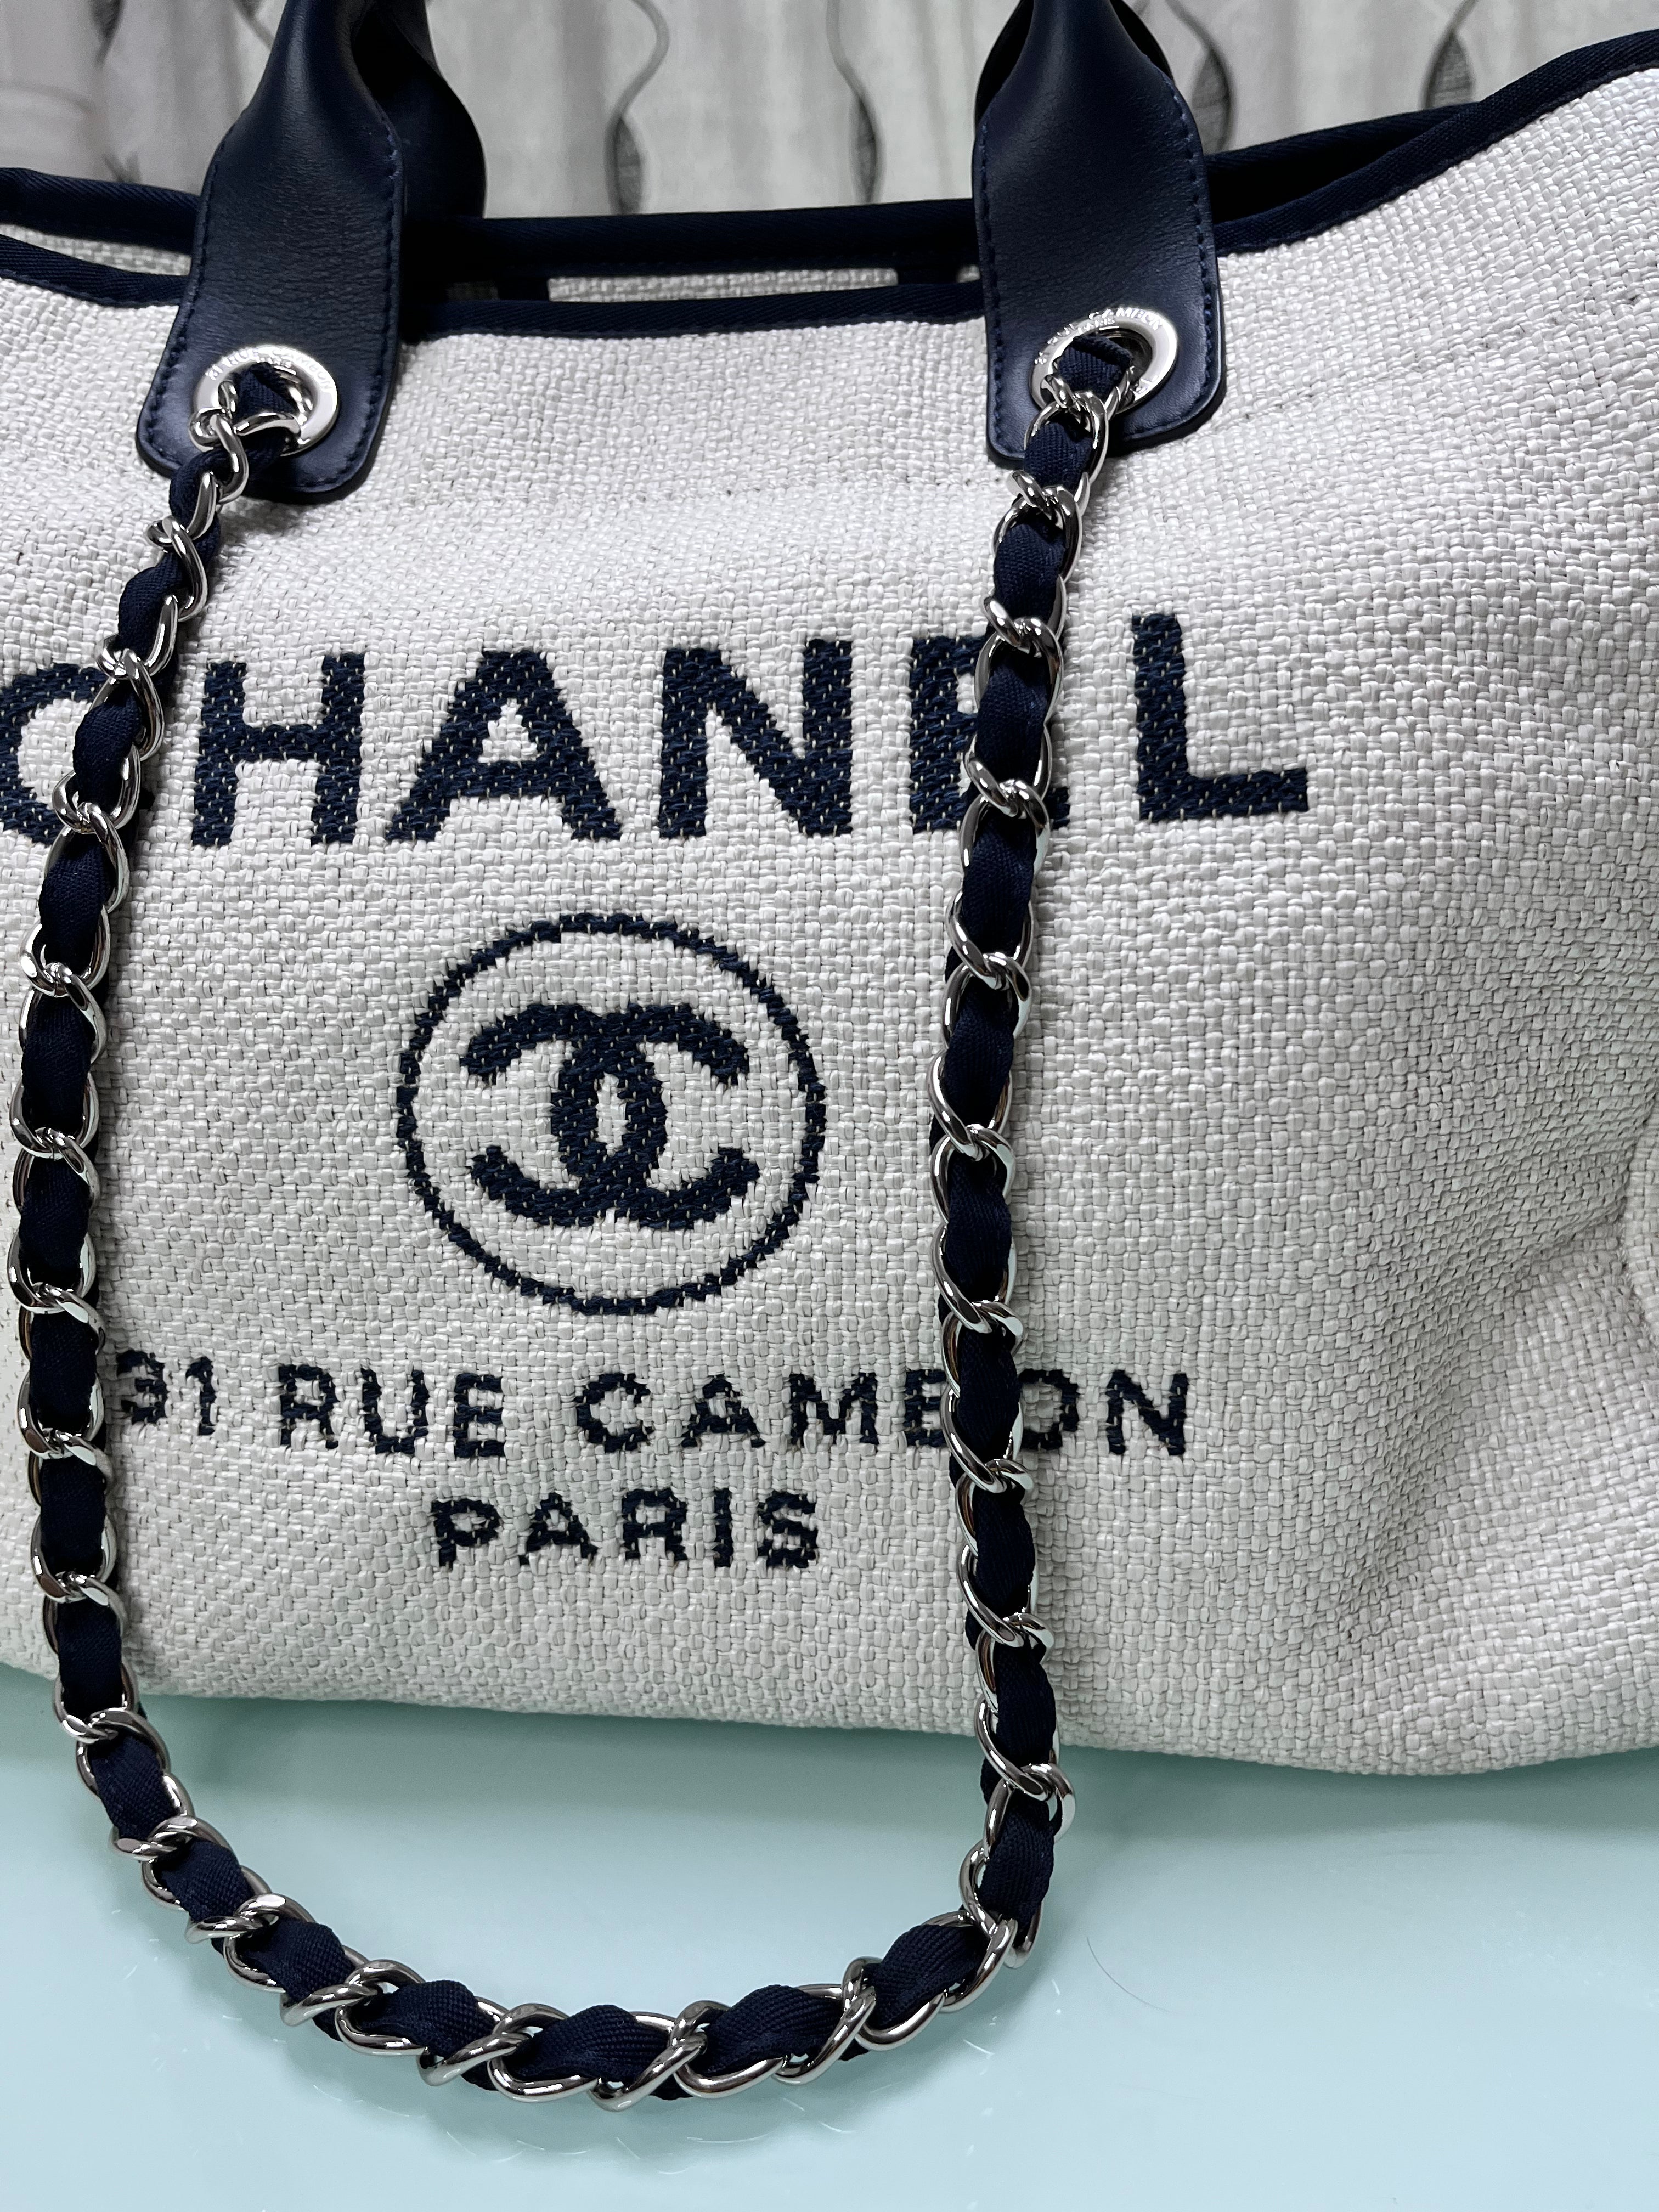 Sold Chanel Deauville Tote Medium White